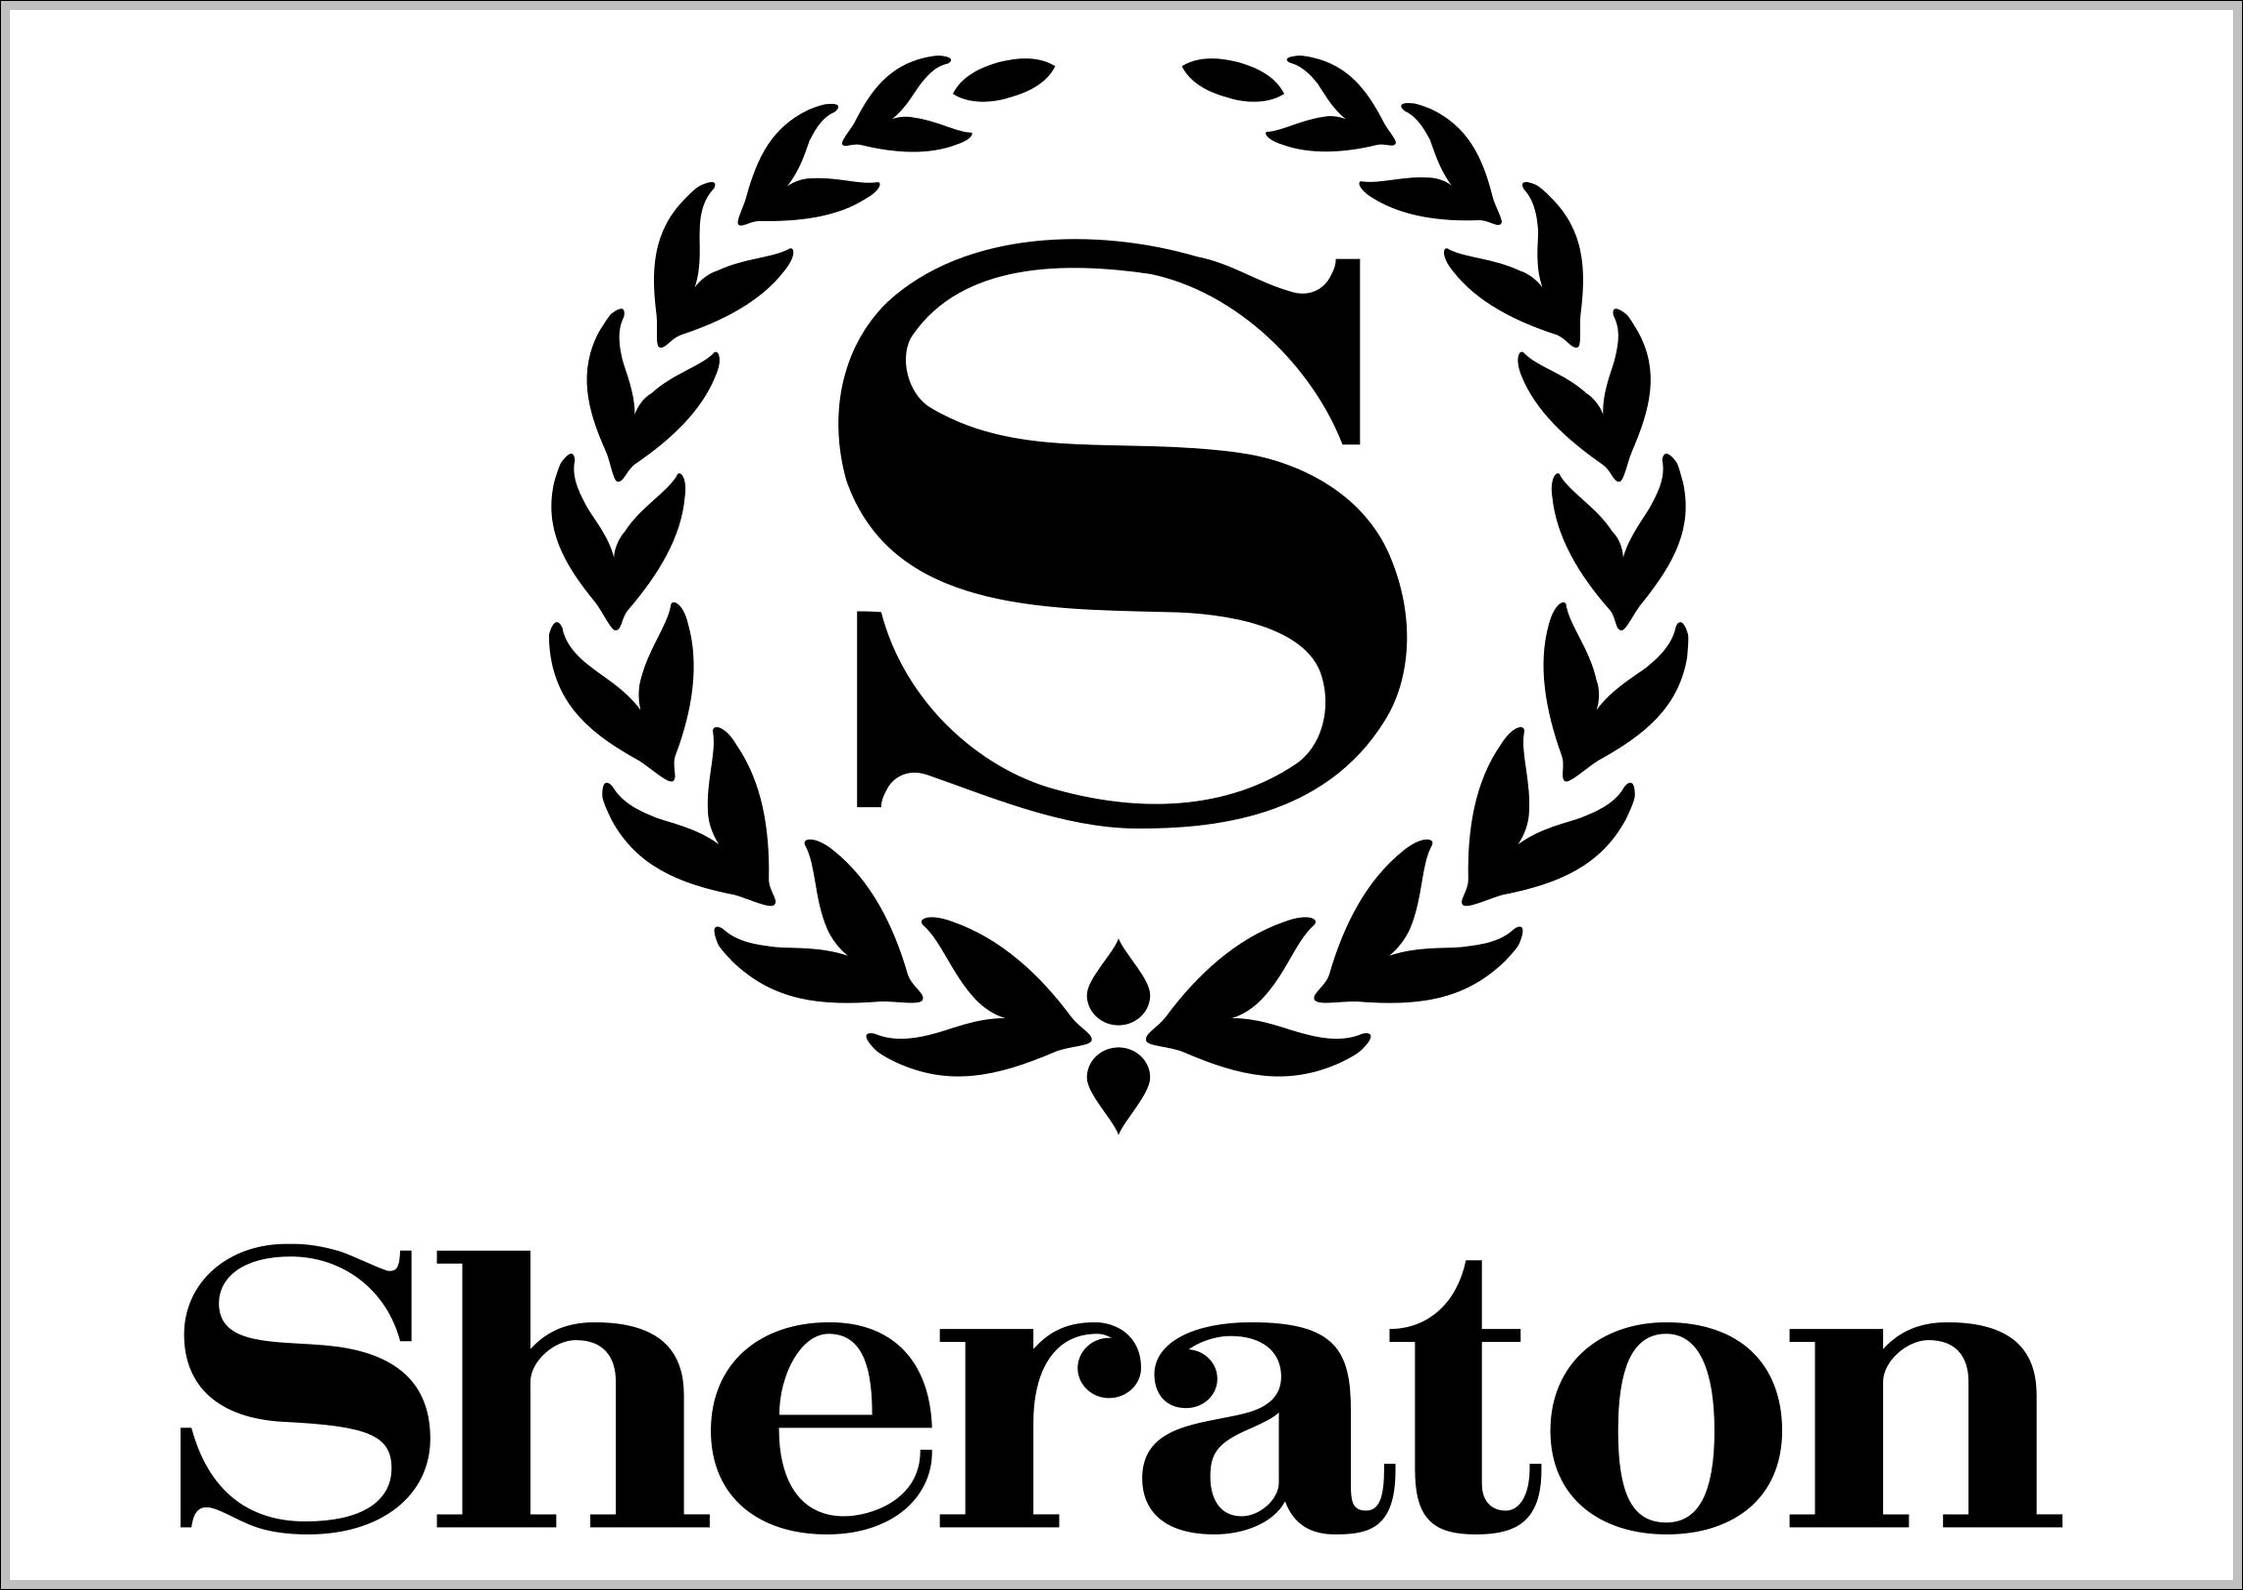 Sheraton Hotels logo